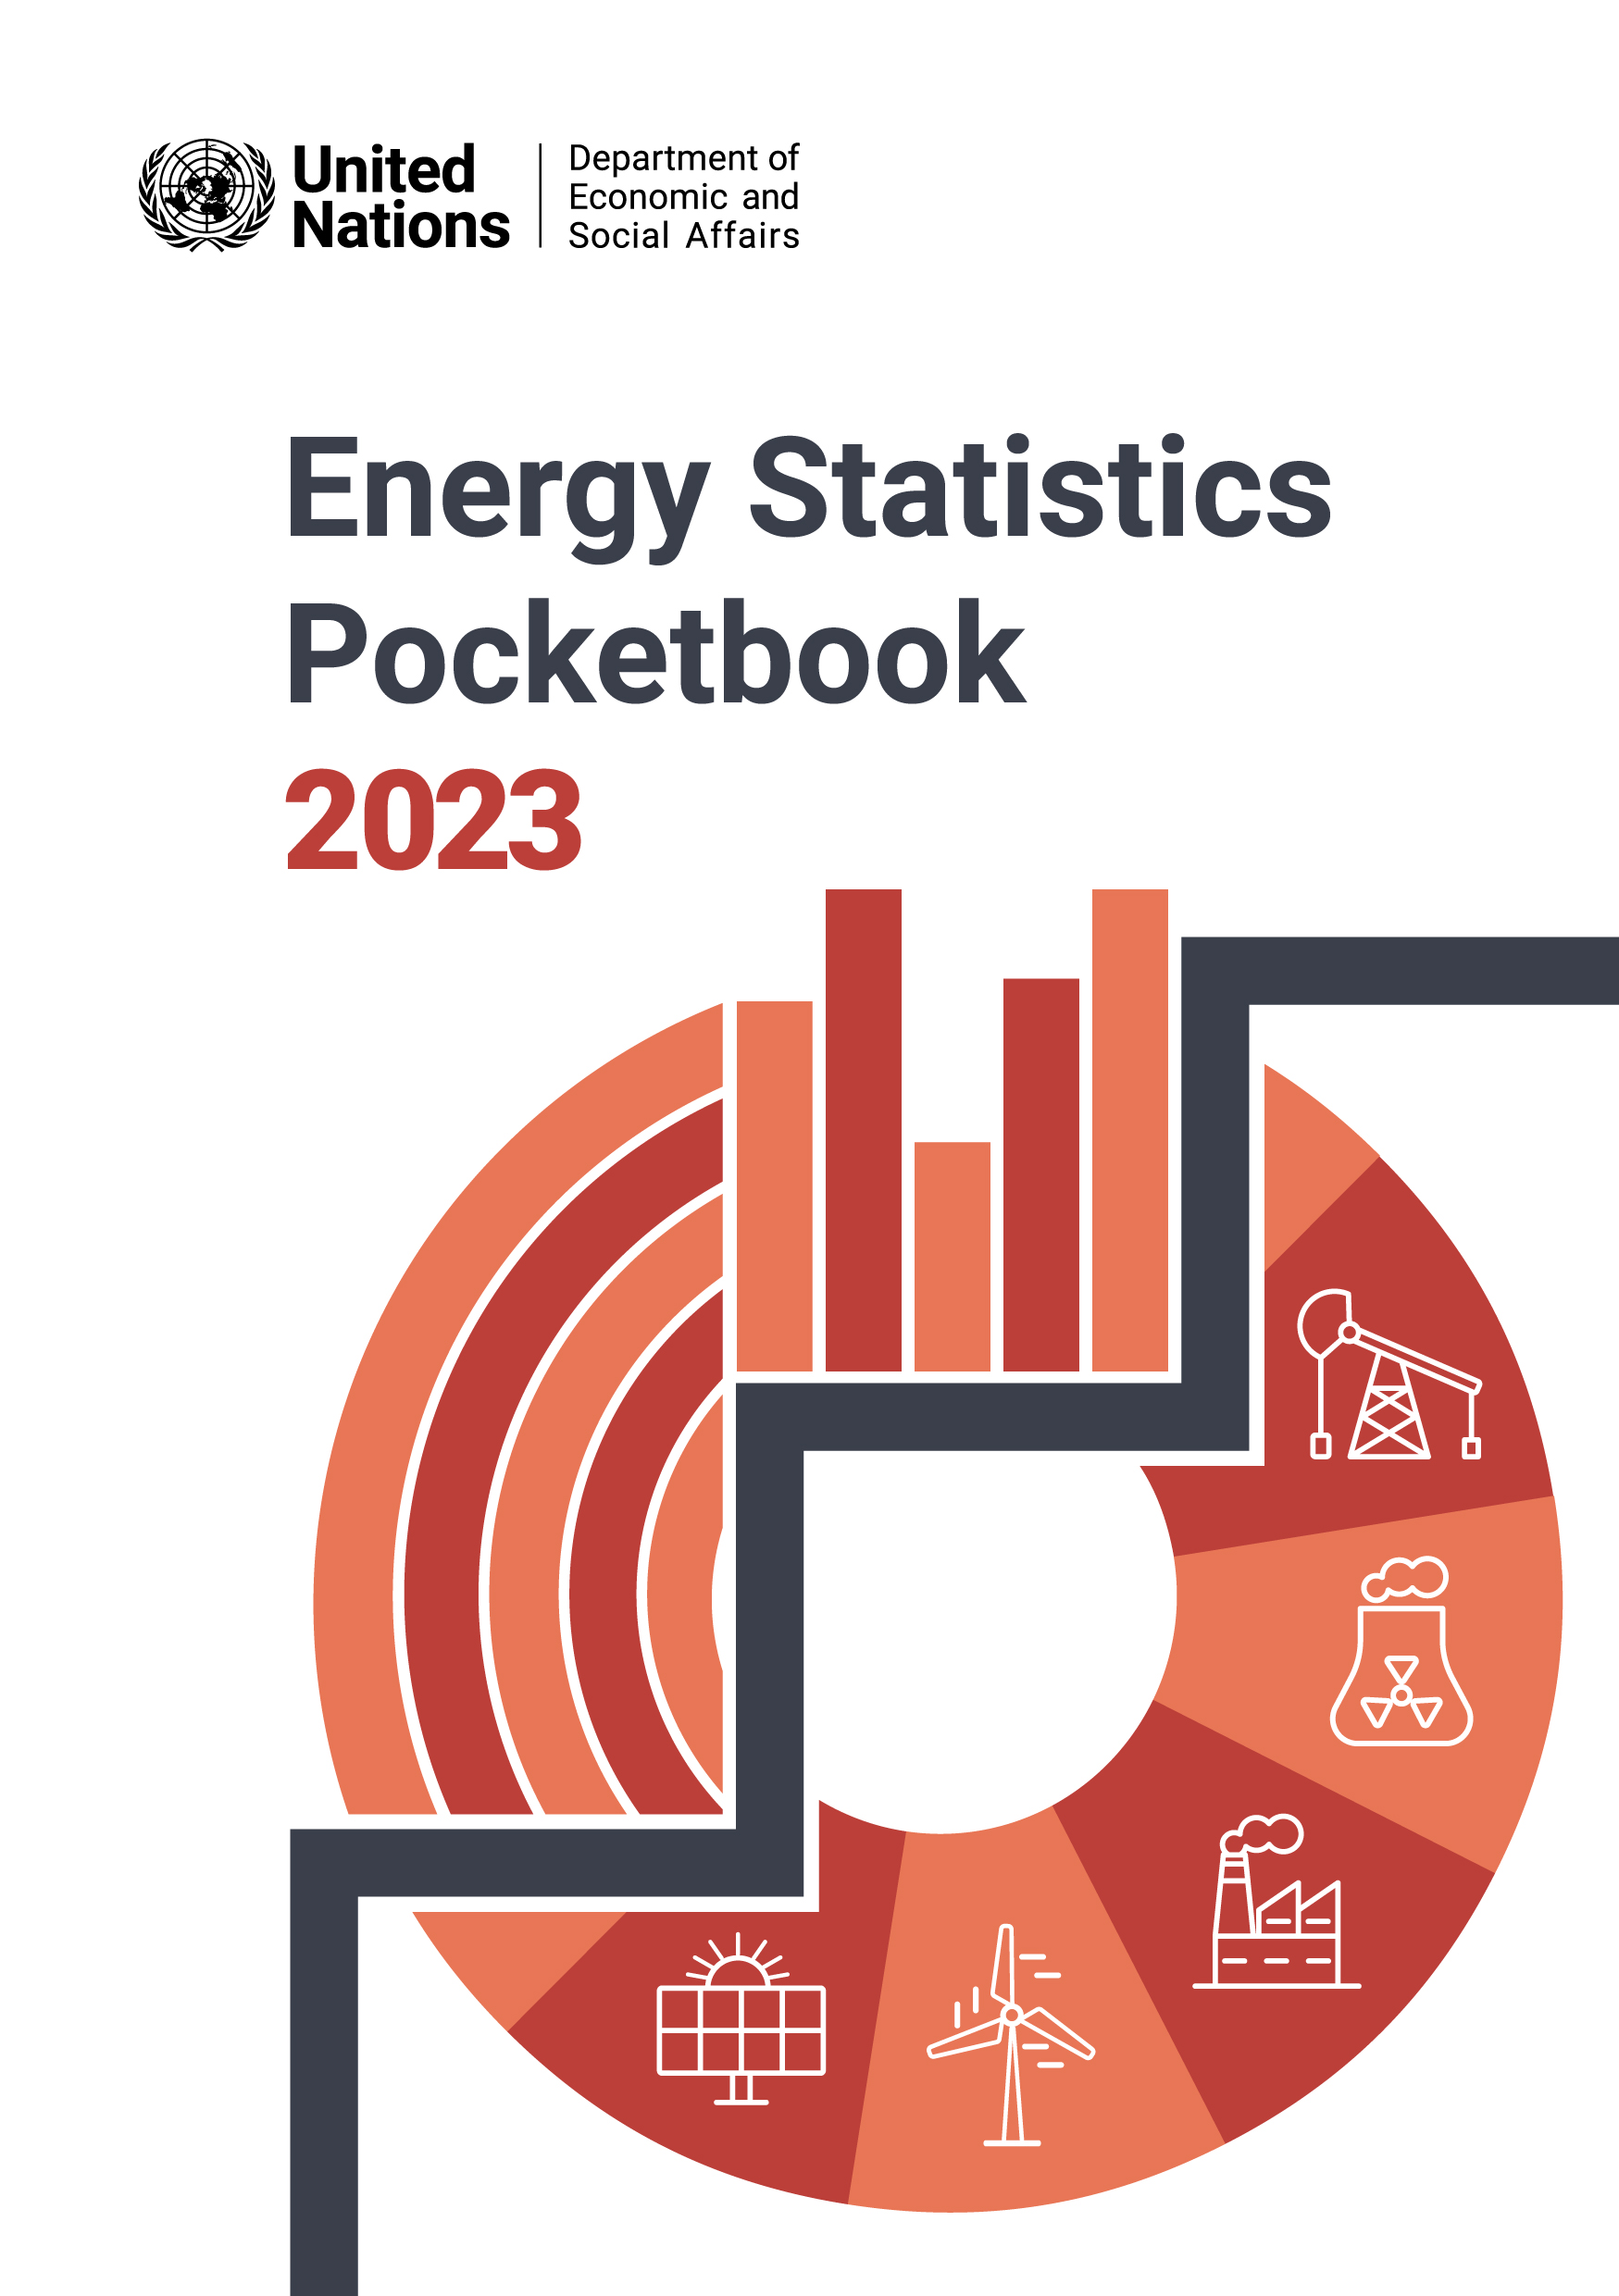 The 2023 Energy Statistics Pocketbook